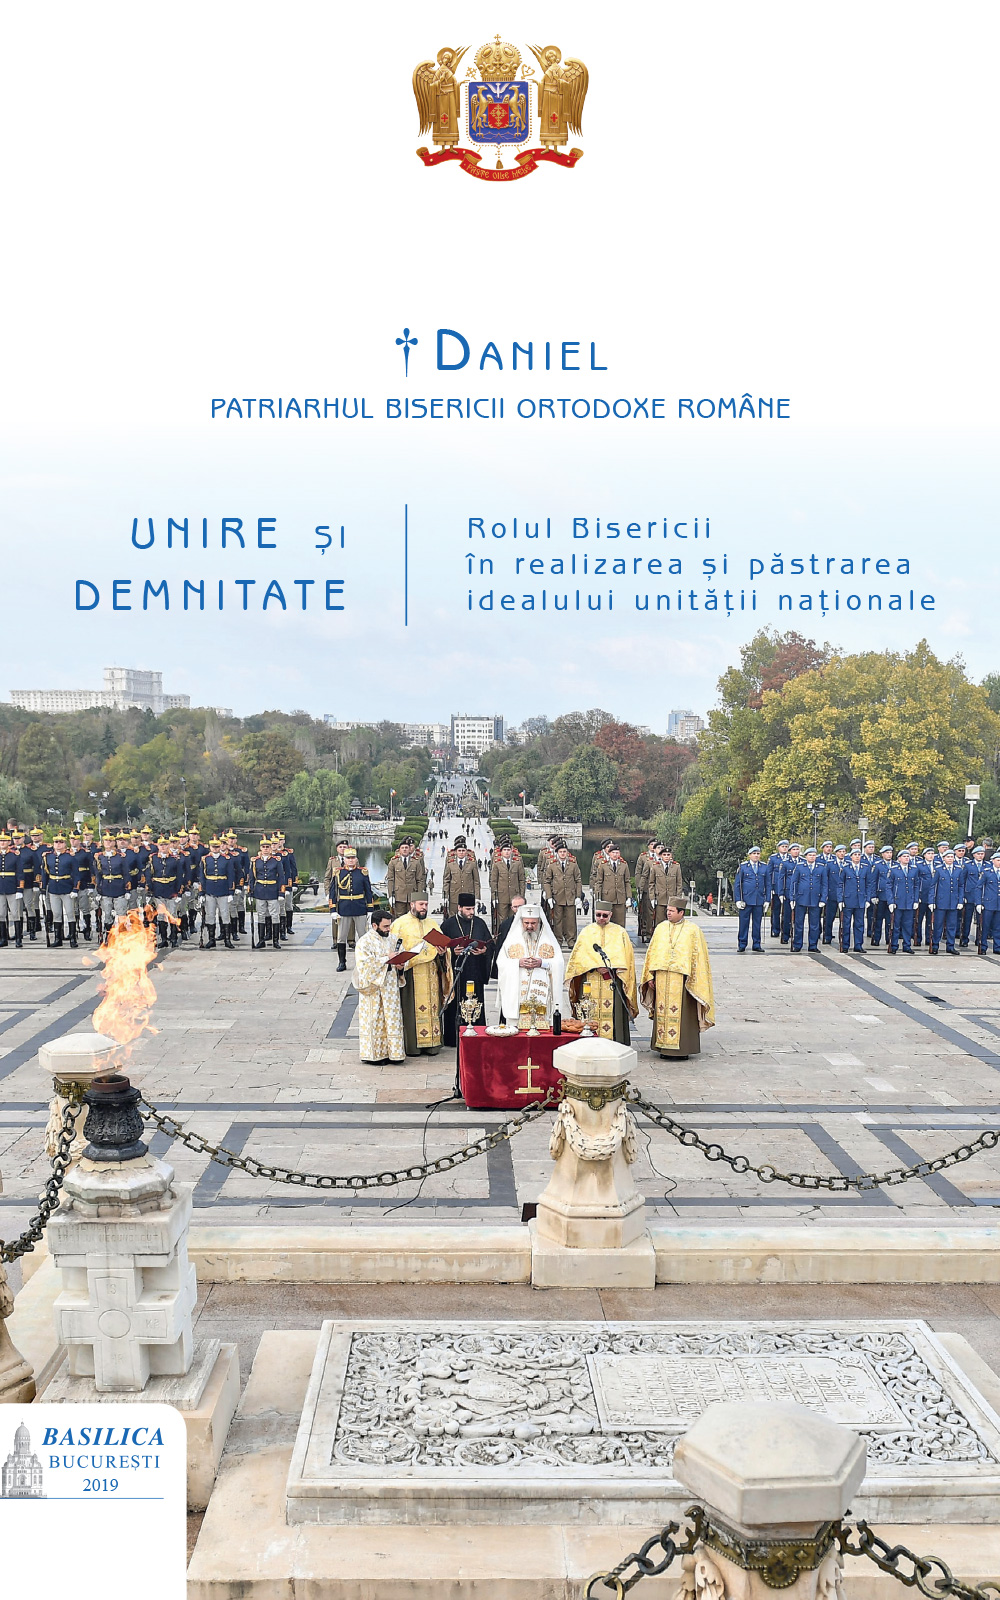 Unire si demnitate - Patriarhul Daniel